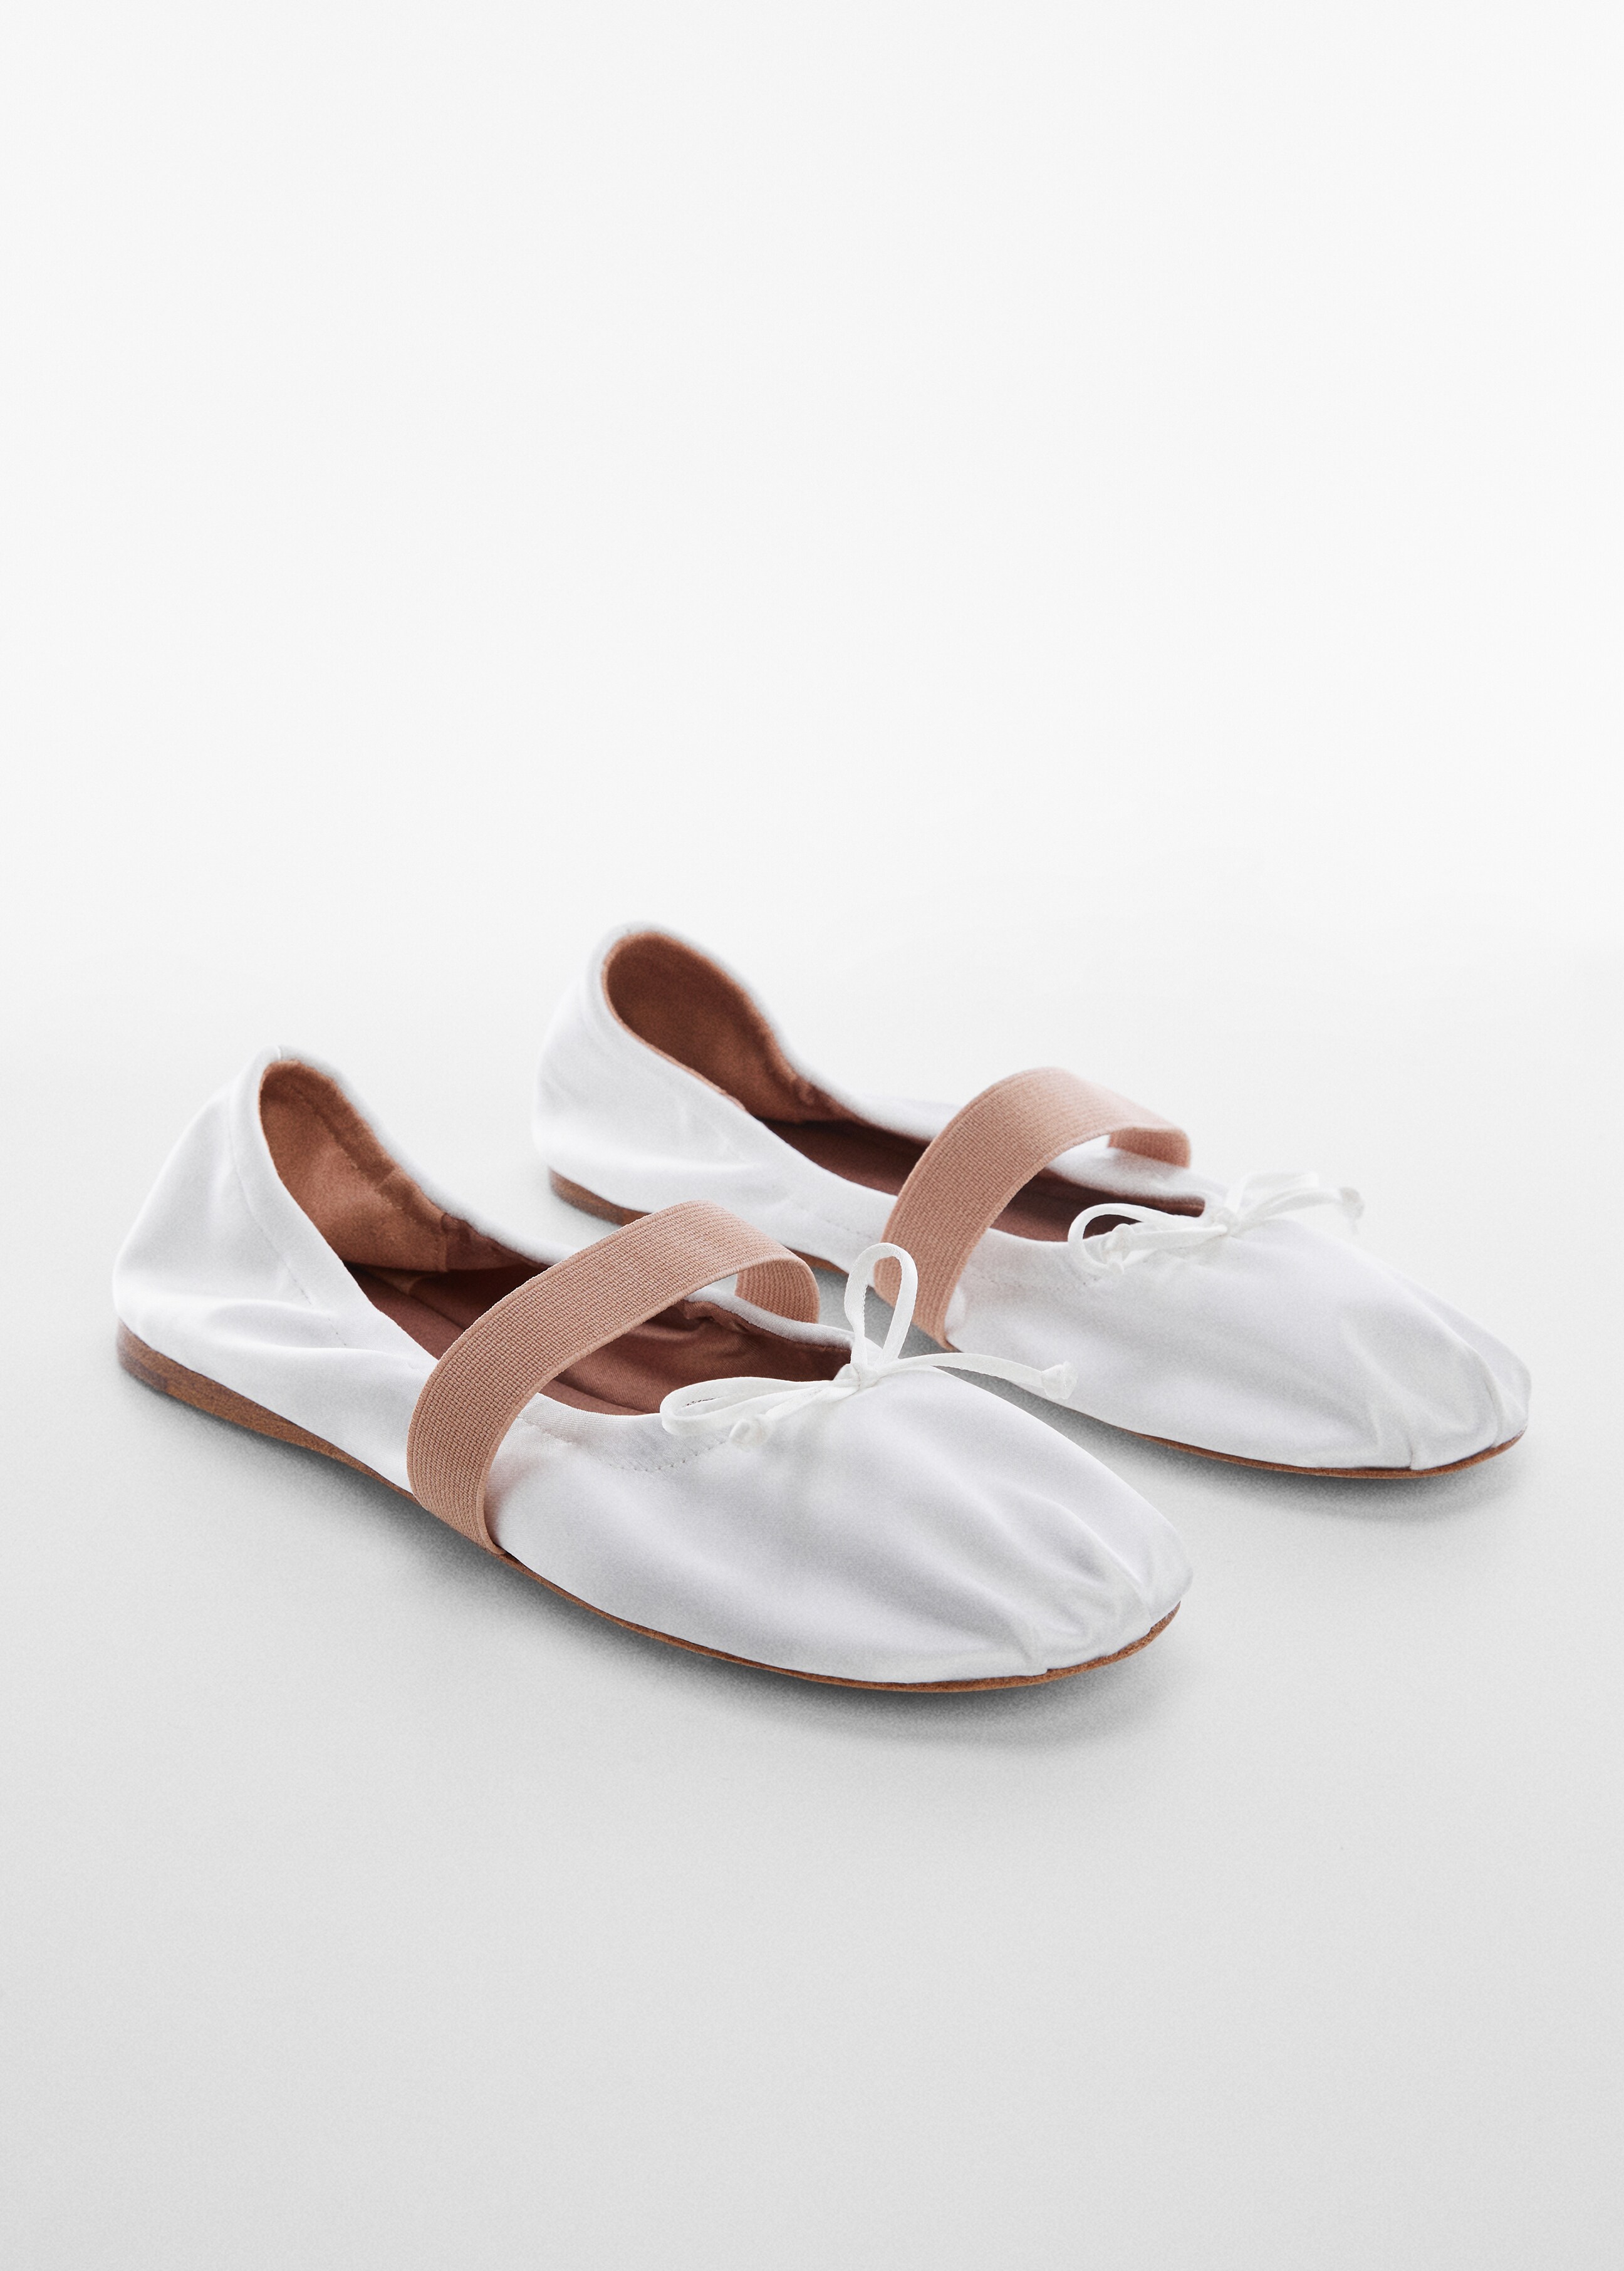 Elastic satin ballerina shoes - Medium plane